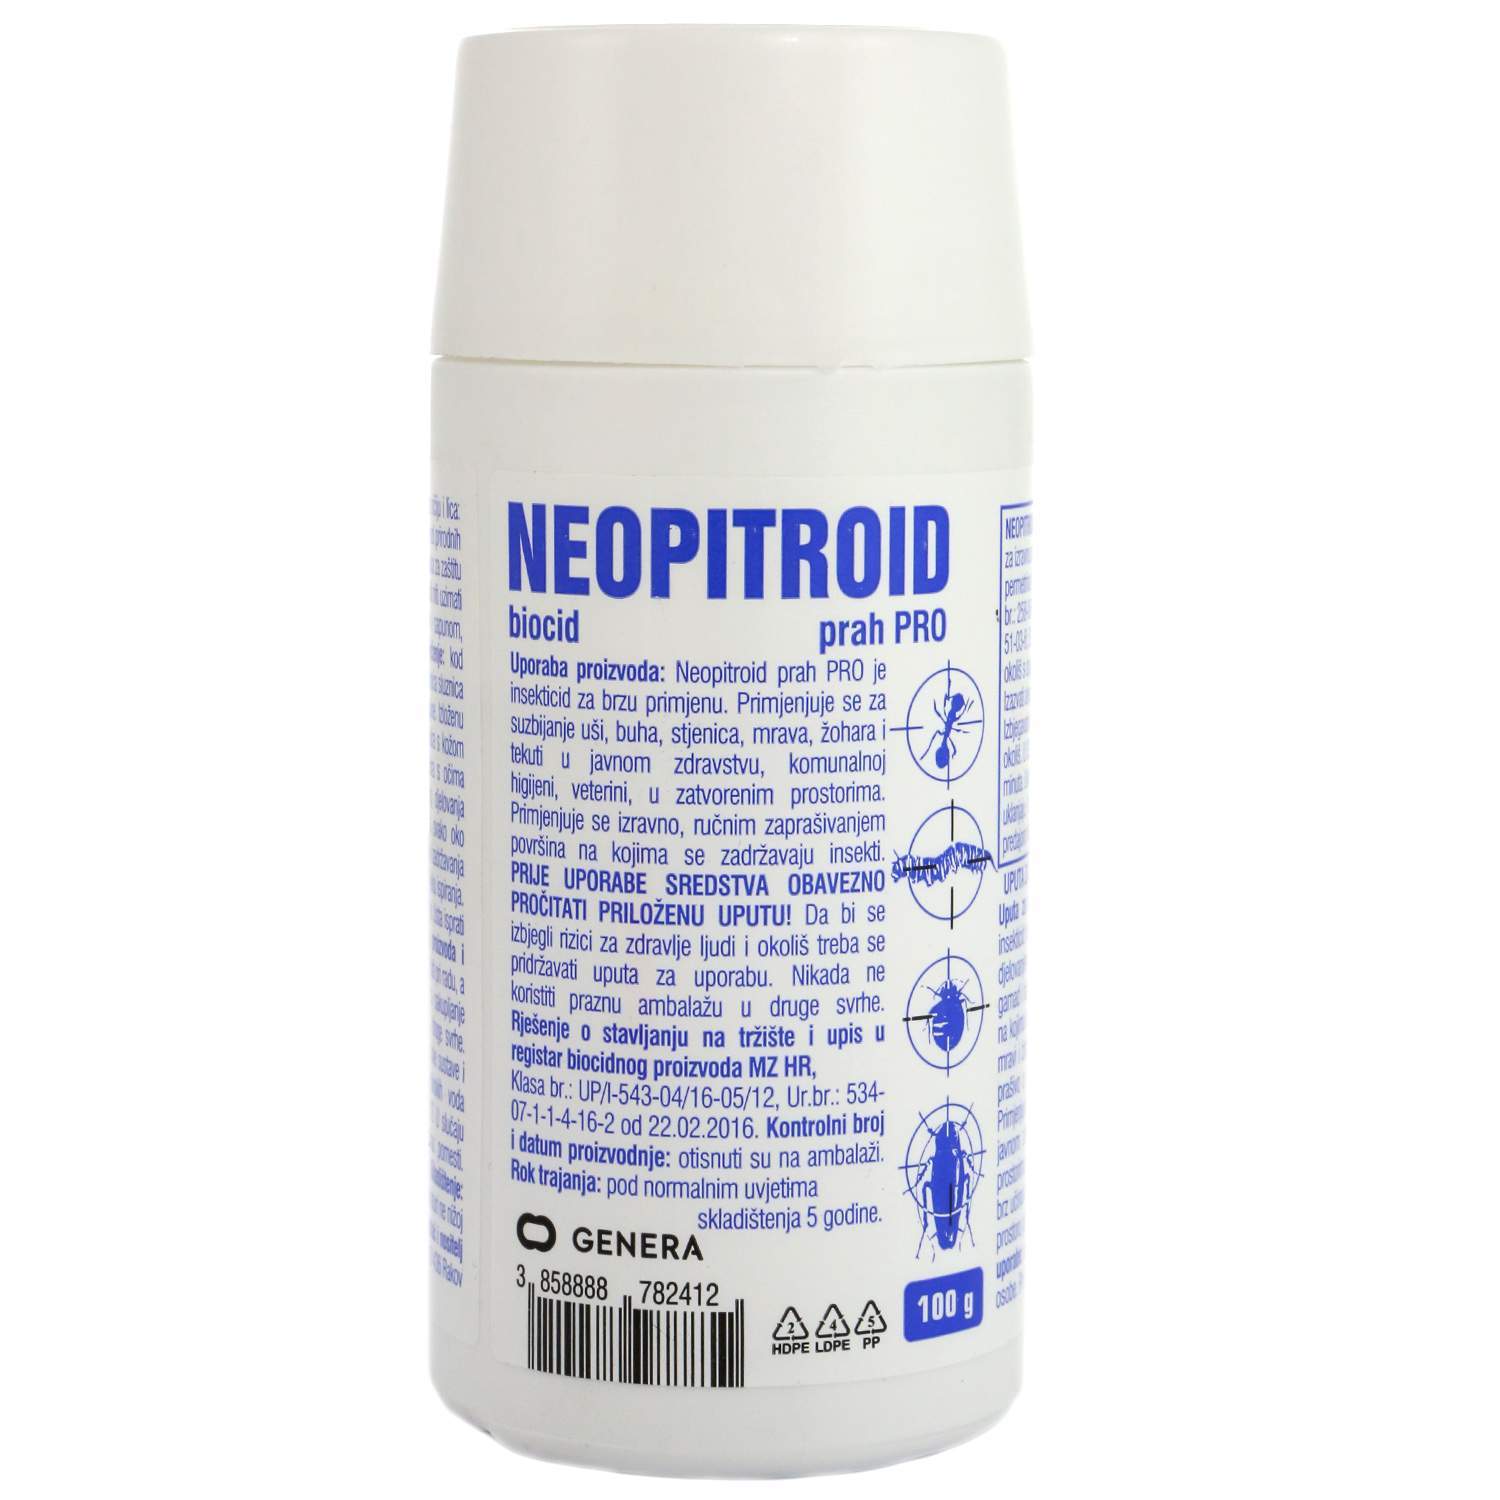 Neopitroid prah pro